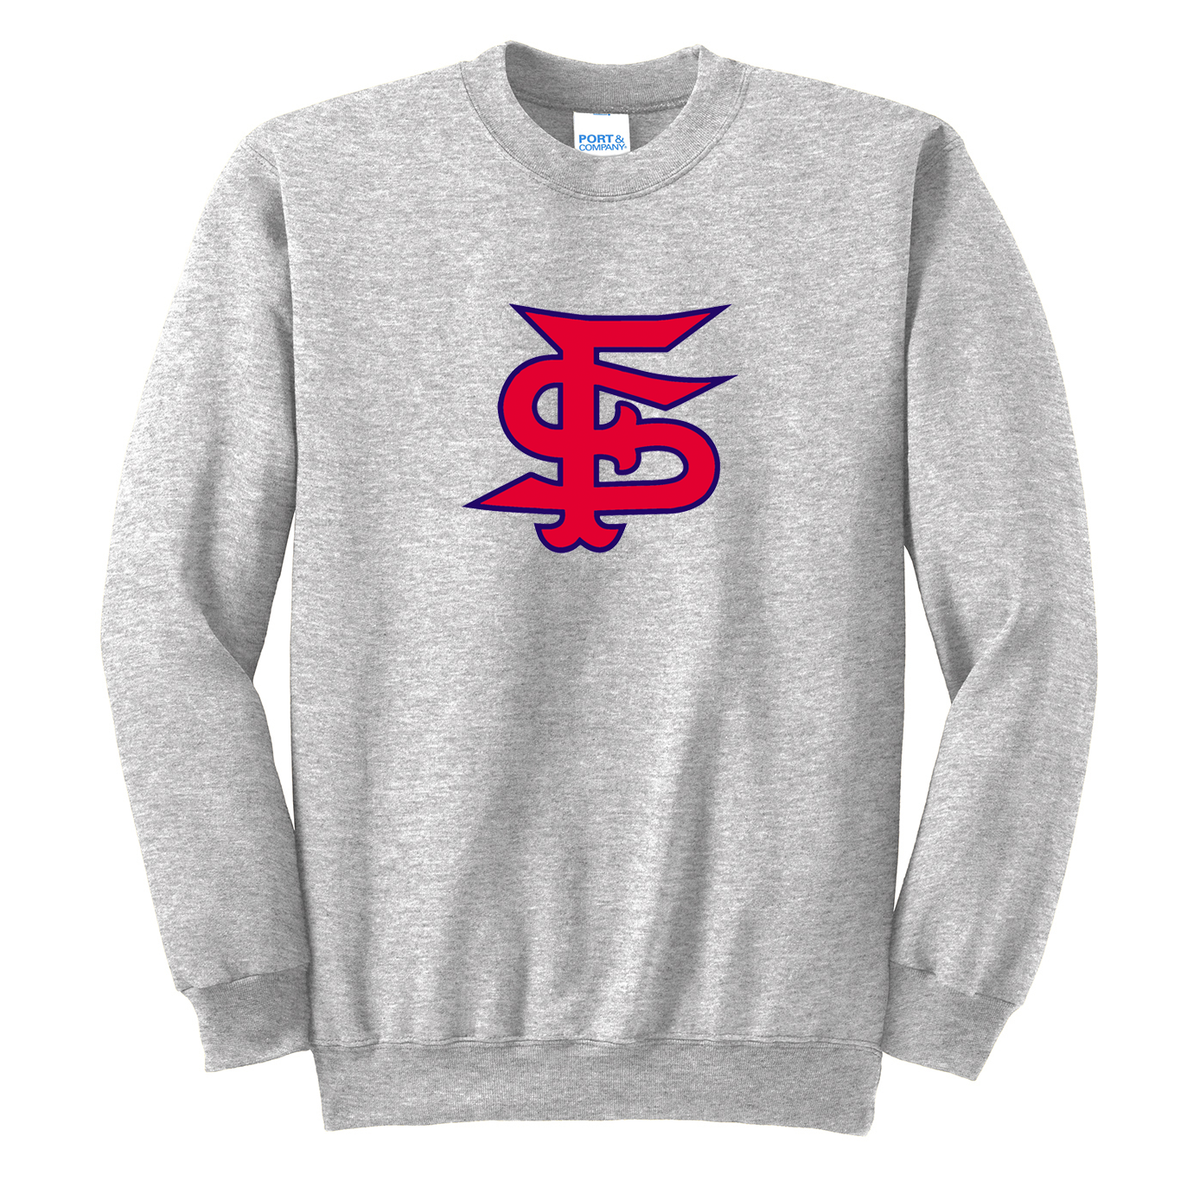 Fallon Sports Crew Neck Sweater